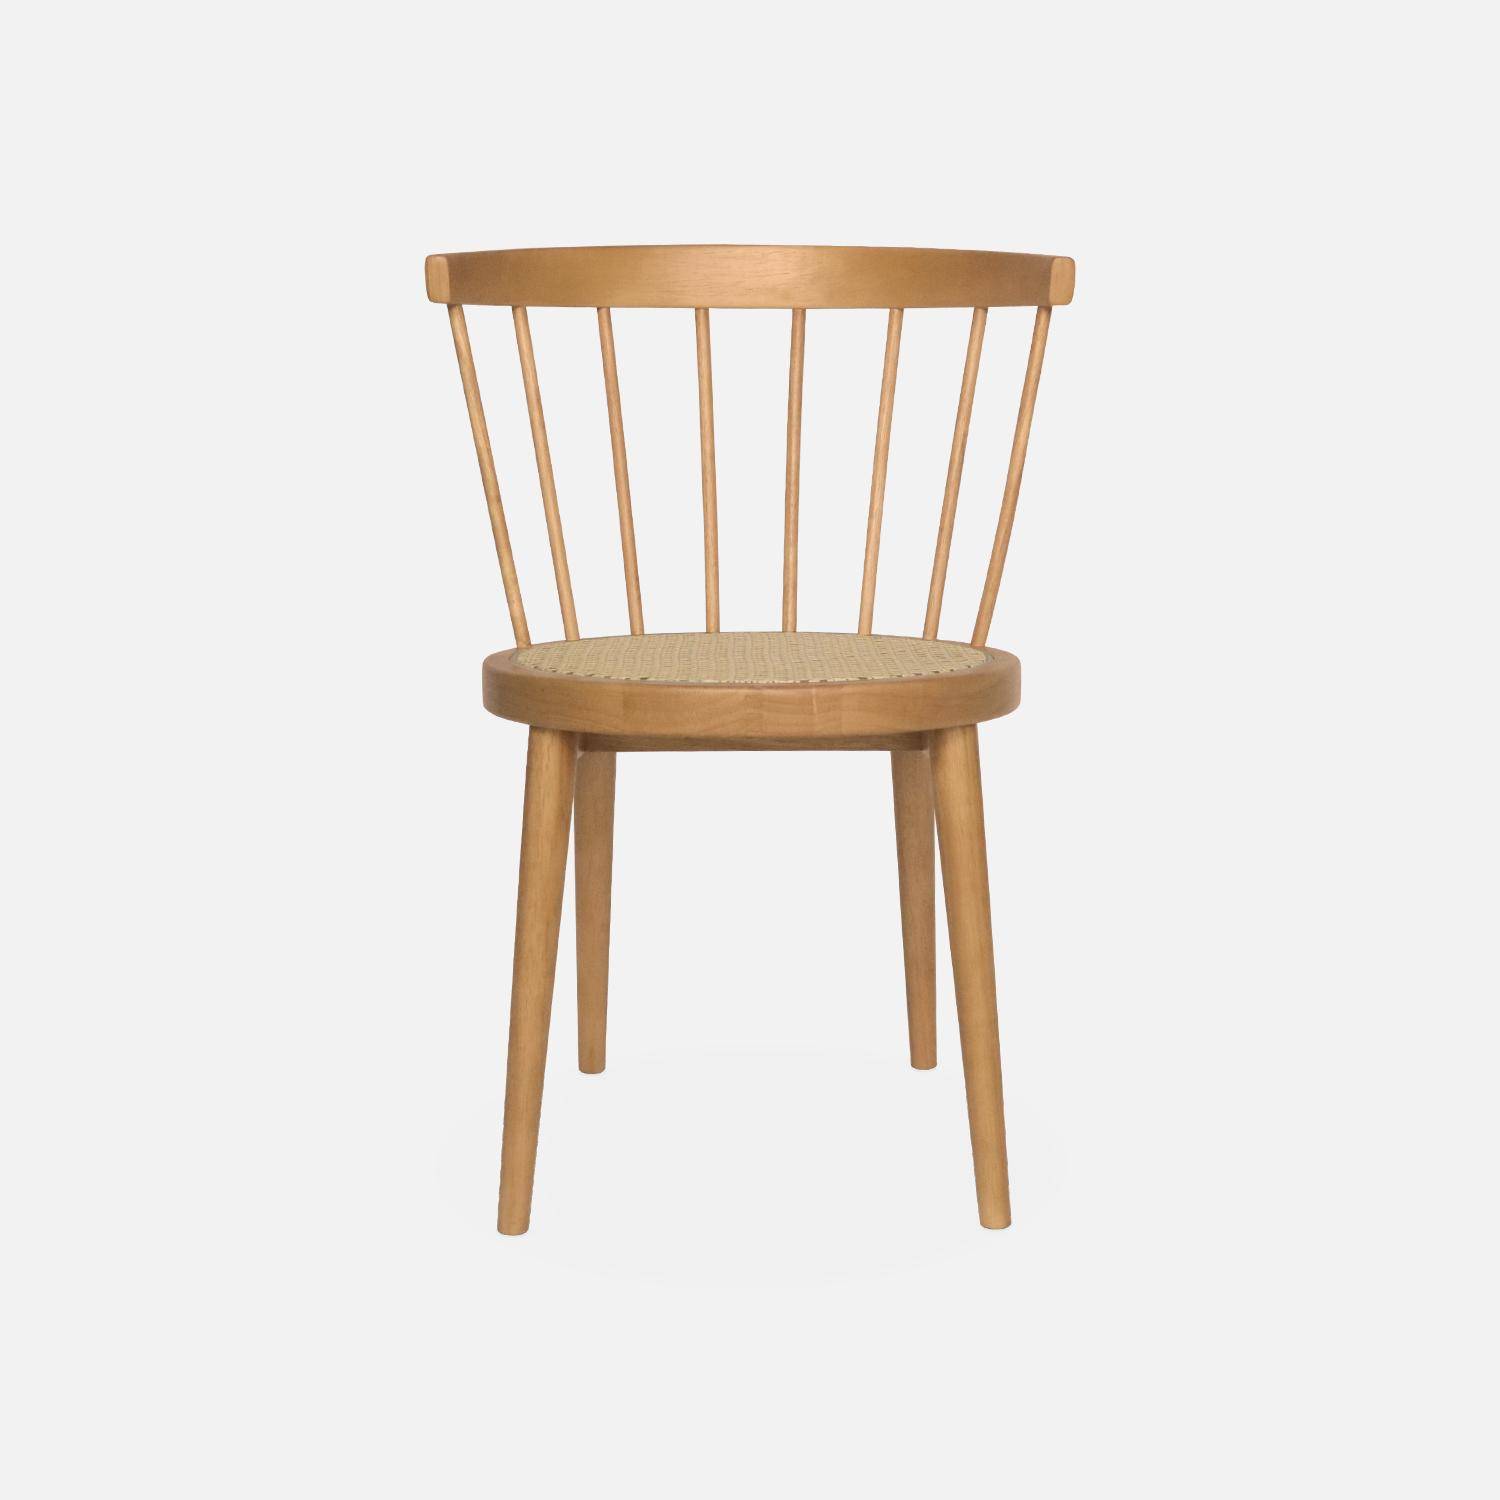 Pair of  Wood and Cane Chairs, Bohemian Spirit, Natural, L53 x W53.5 x H 6 cm,sweeek,Photo6